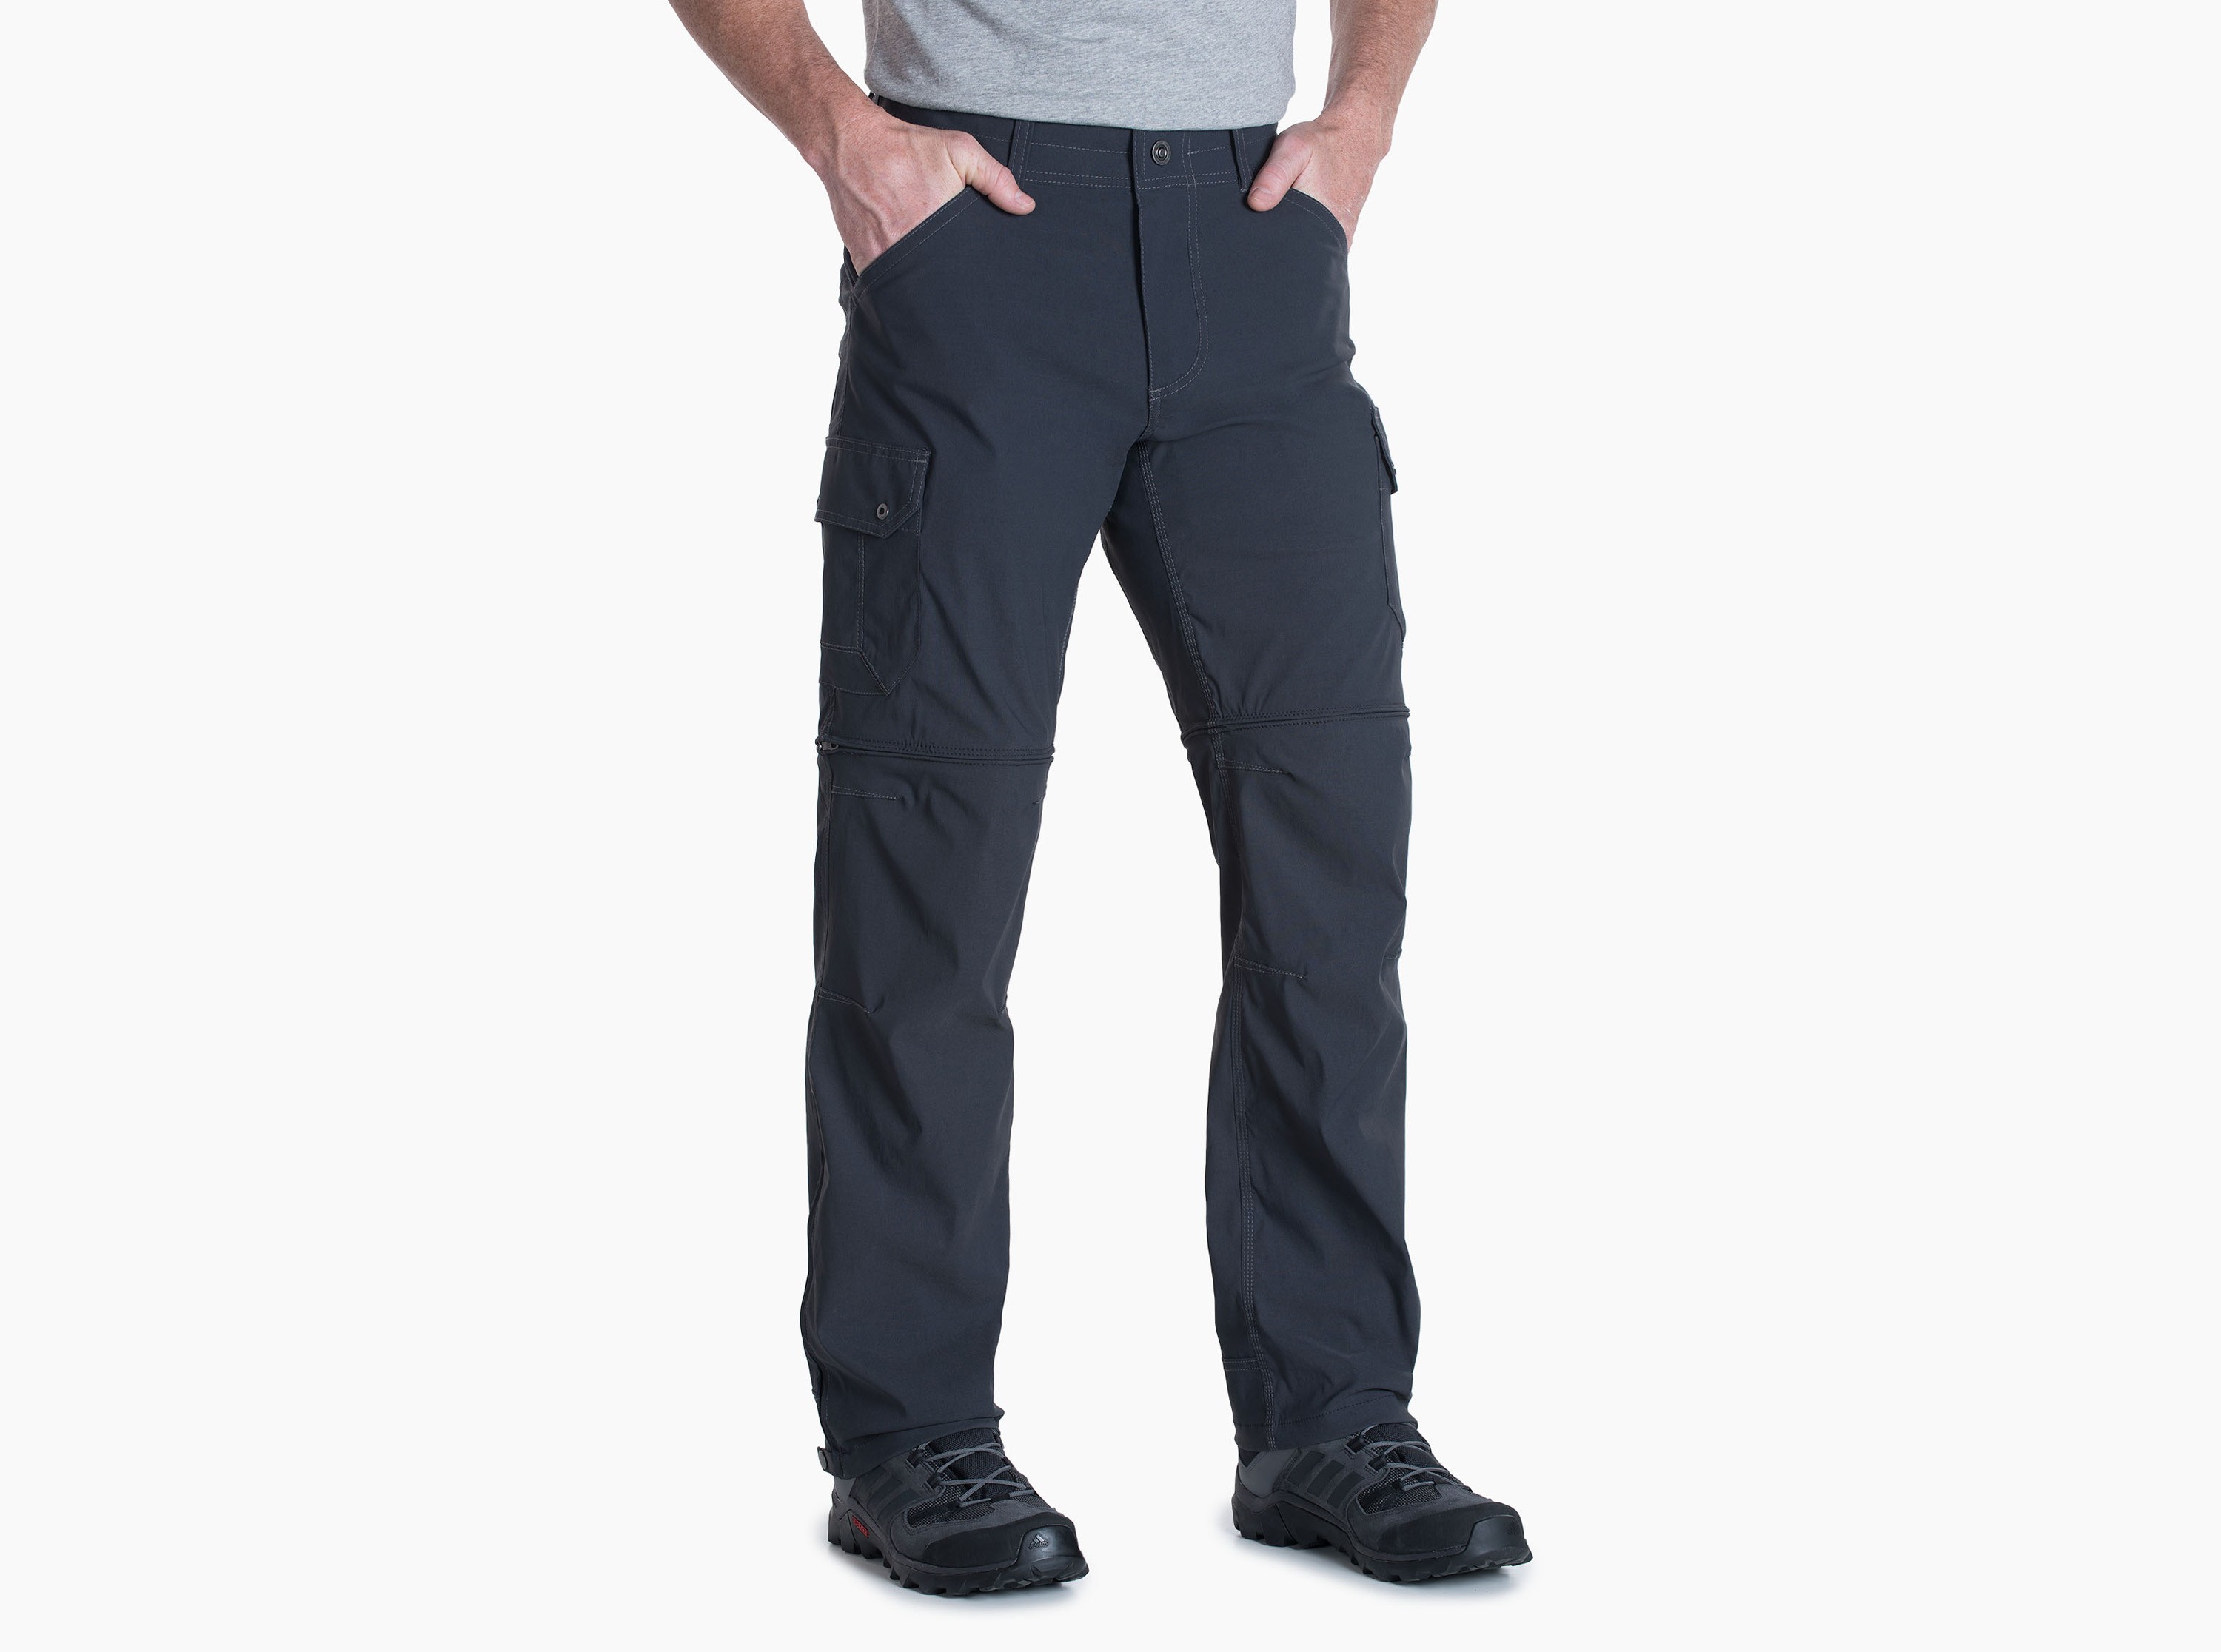 kuhl kliffside convertible pants size 8  Clothes design, Fashion tips,  Fashion trends